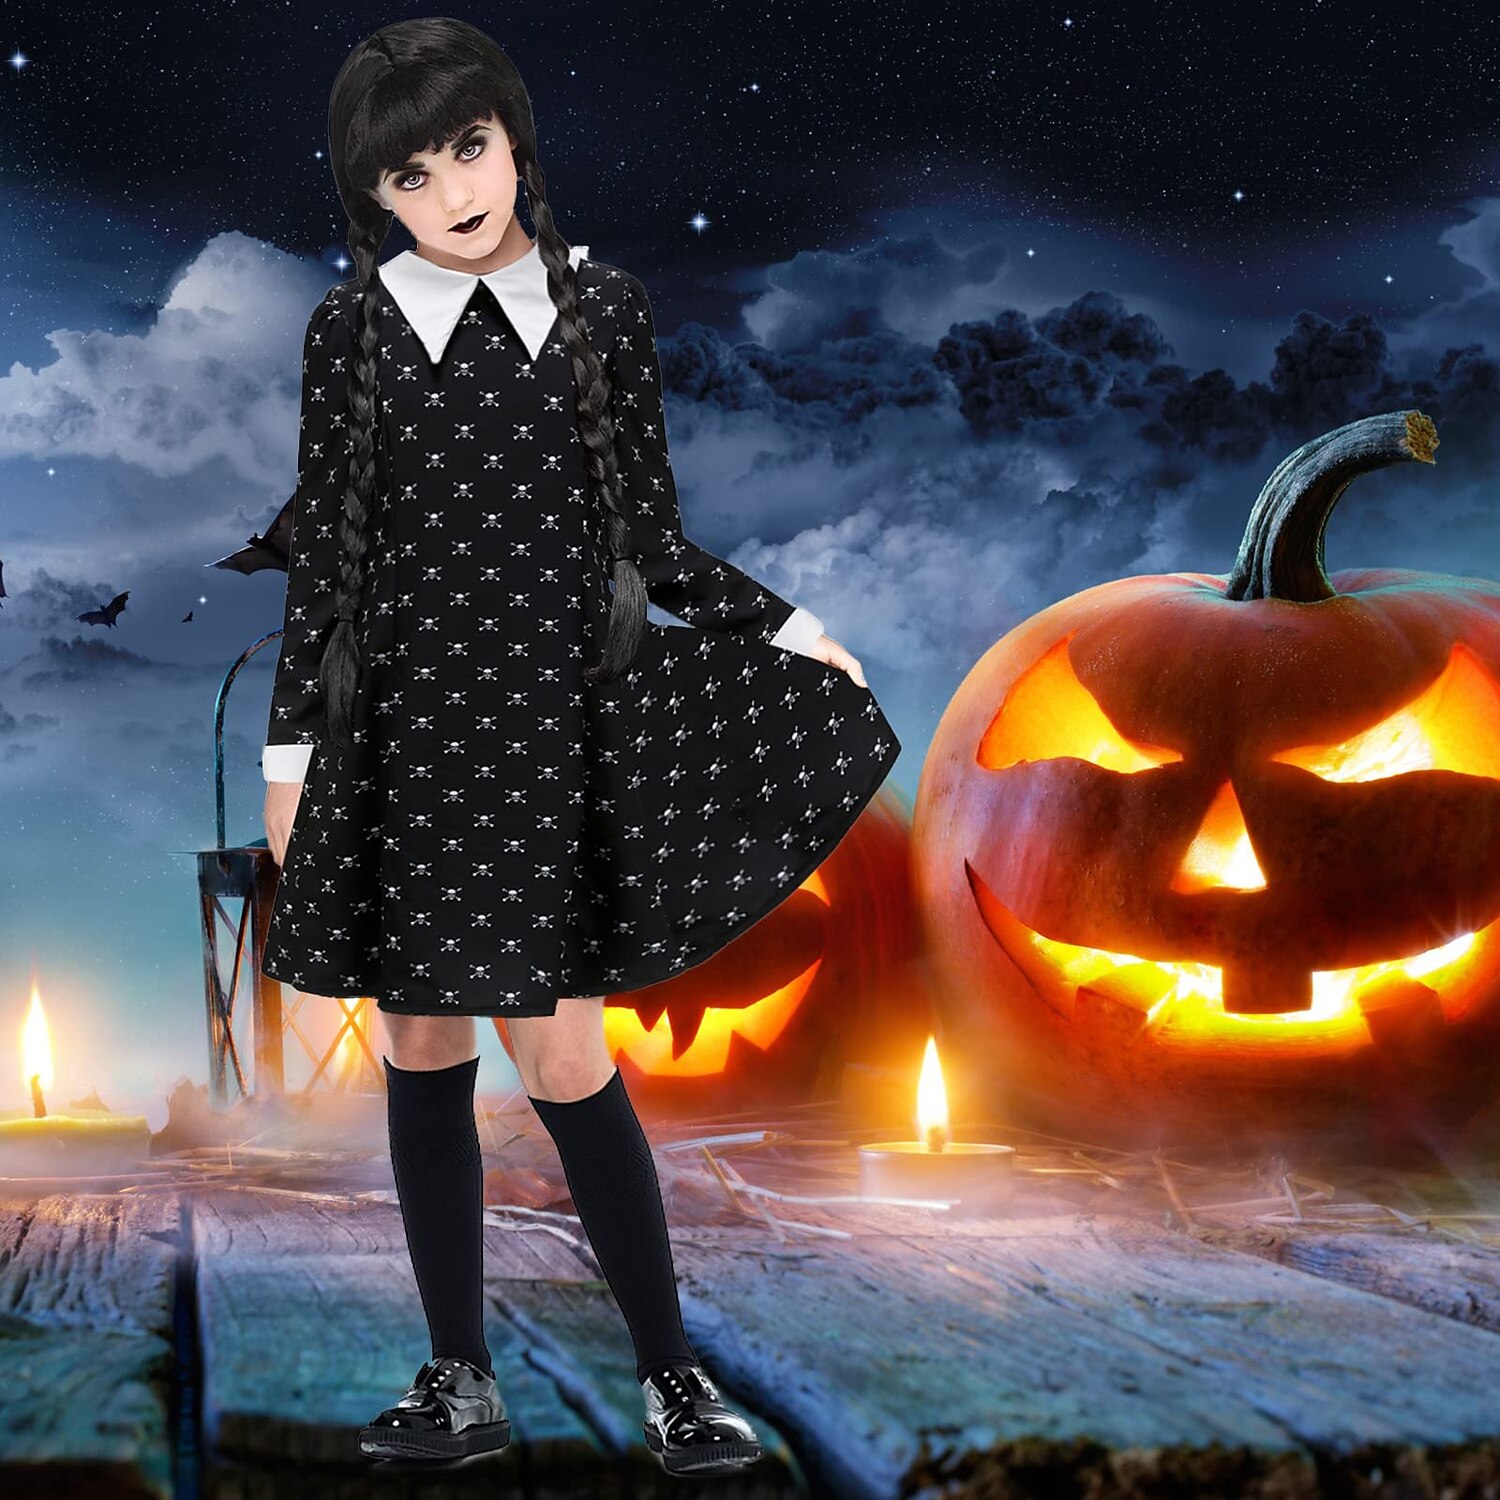 Wednesday Addams Halloween Costume Wig Dress All Black